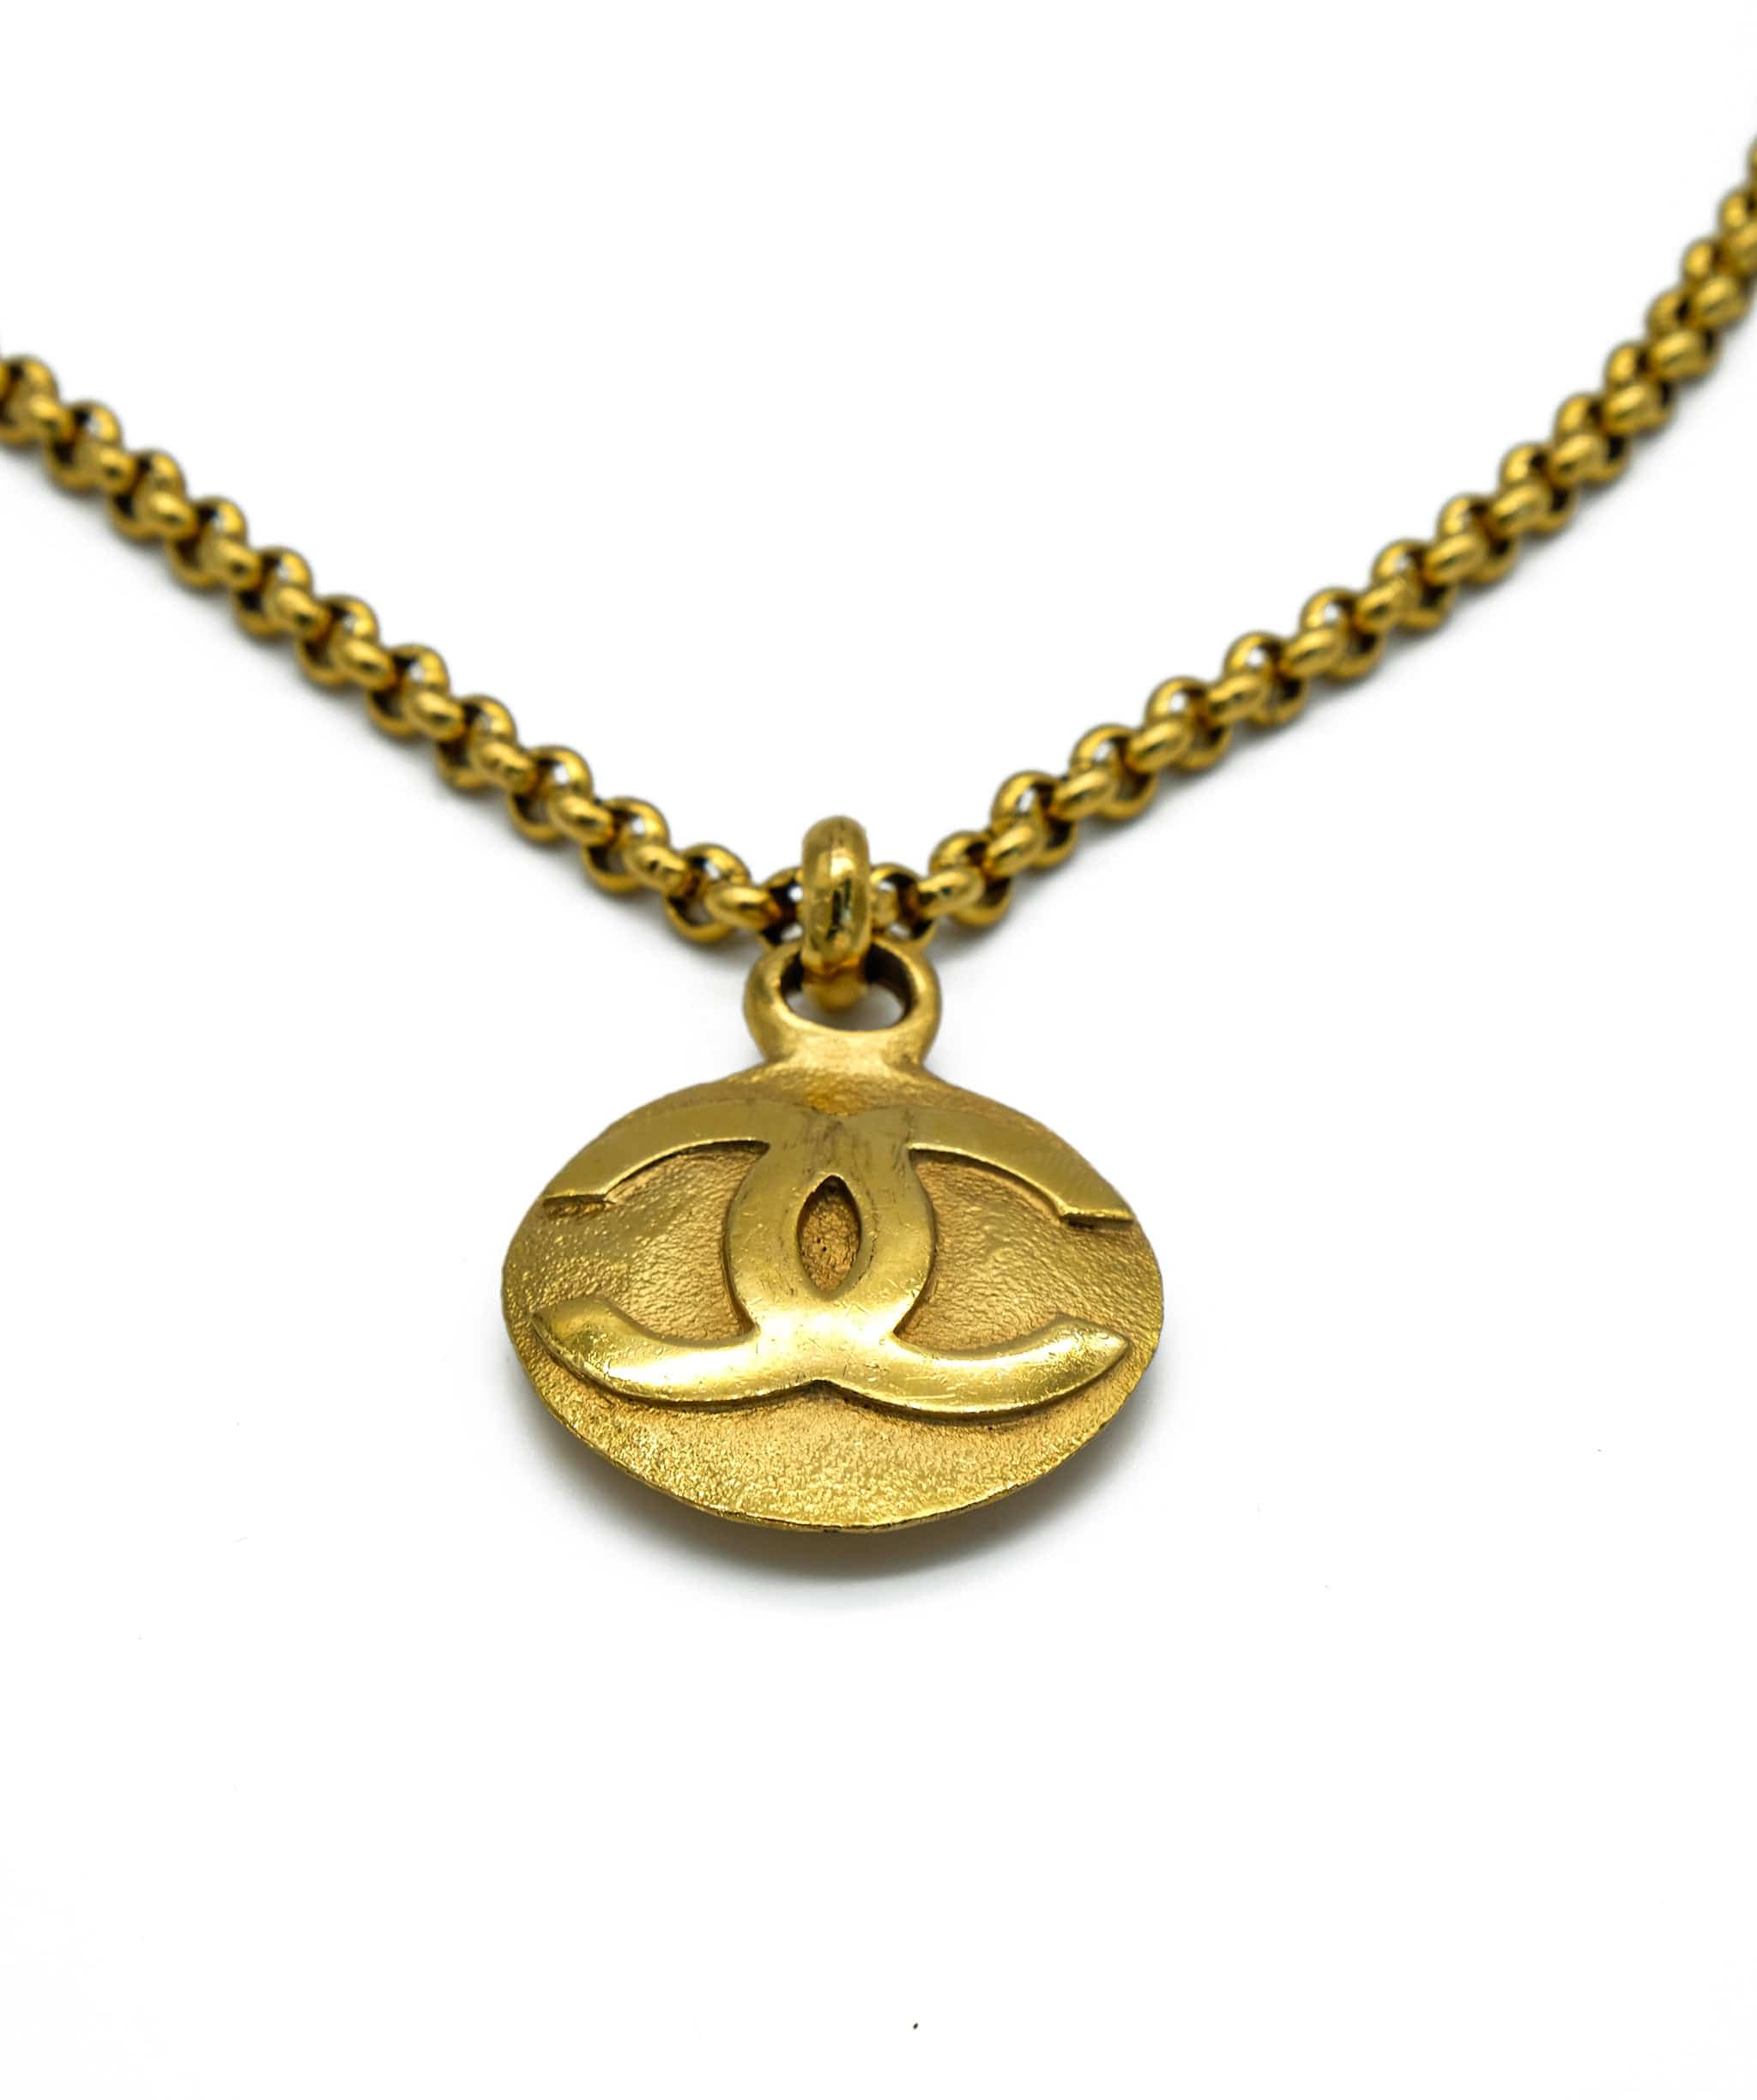 Chanel Chanel Medallion 24K Pendant RJL1846